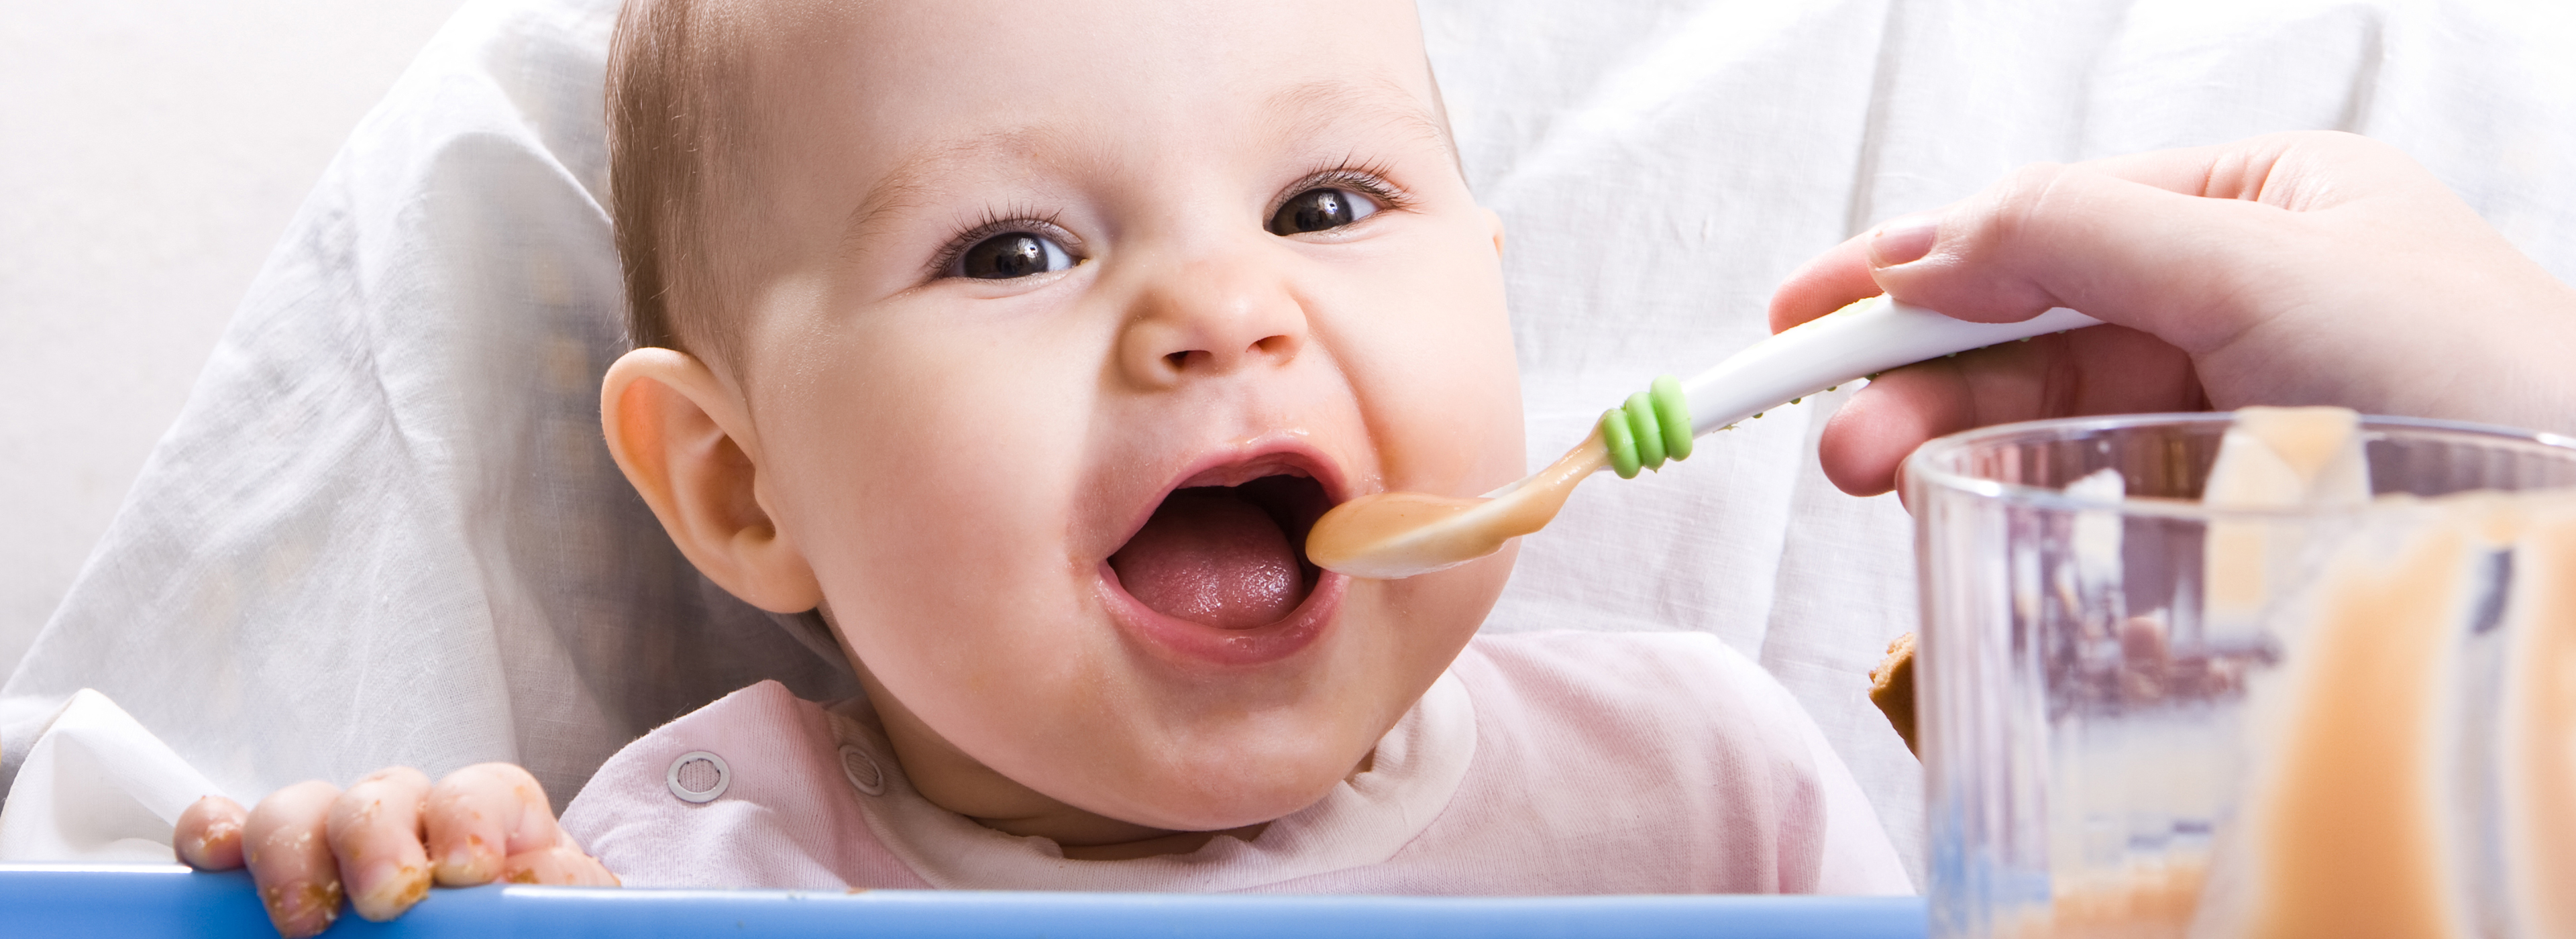 Frutas aptas para bebés de 6 meses 🍏 Blog Hero Baby